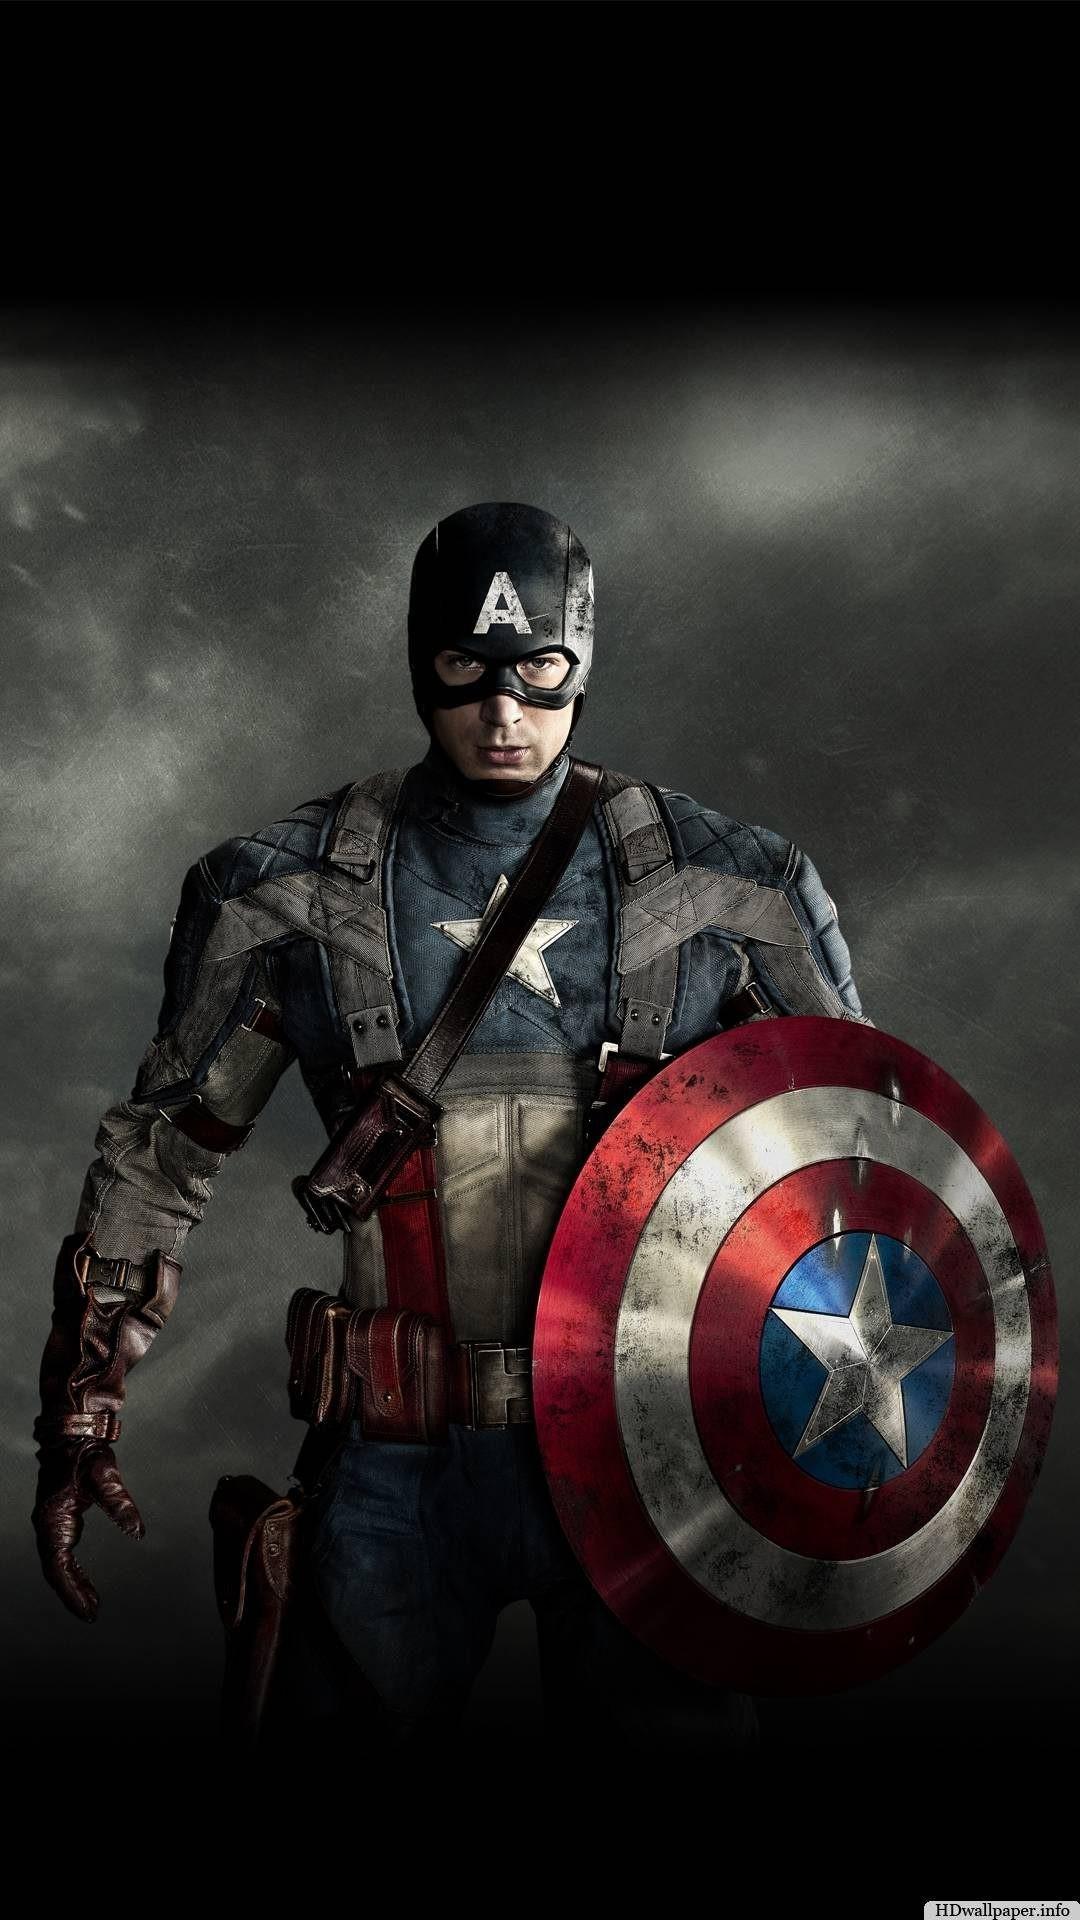 Captain America iPhone 6 Wallpaper